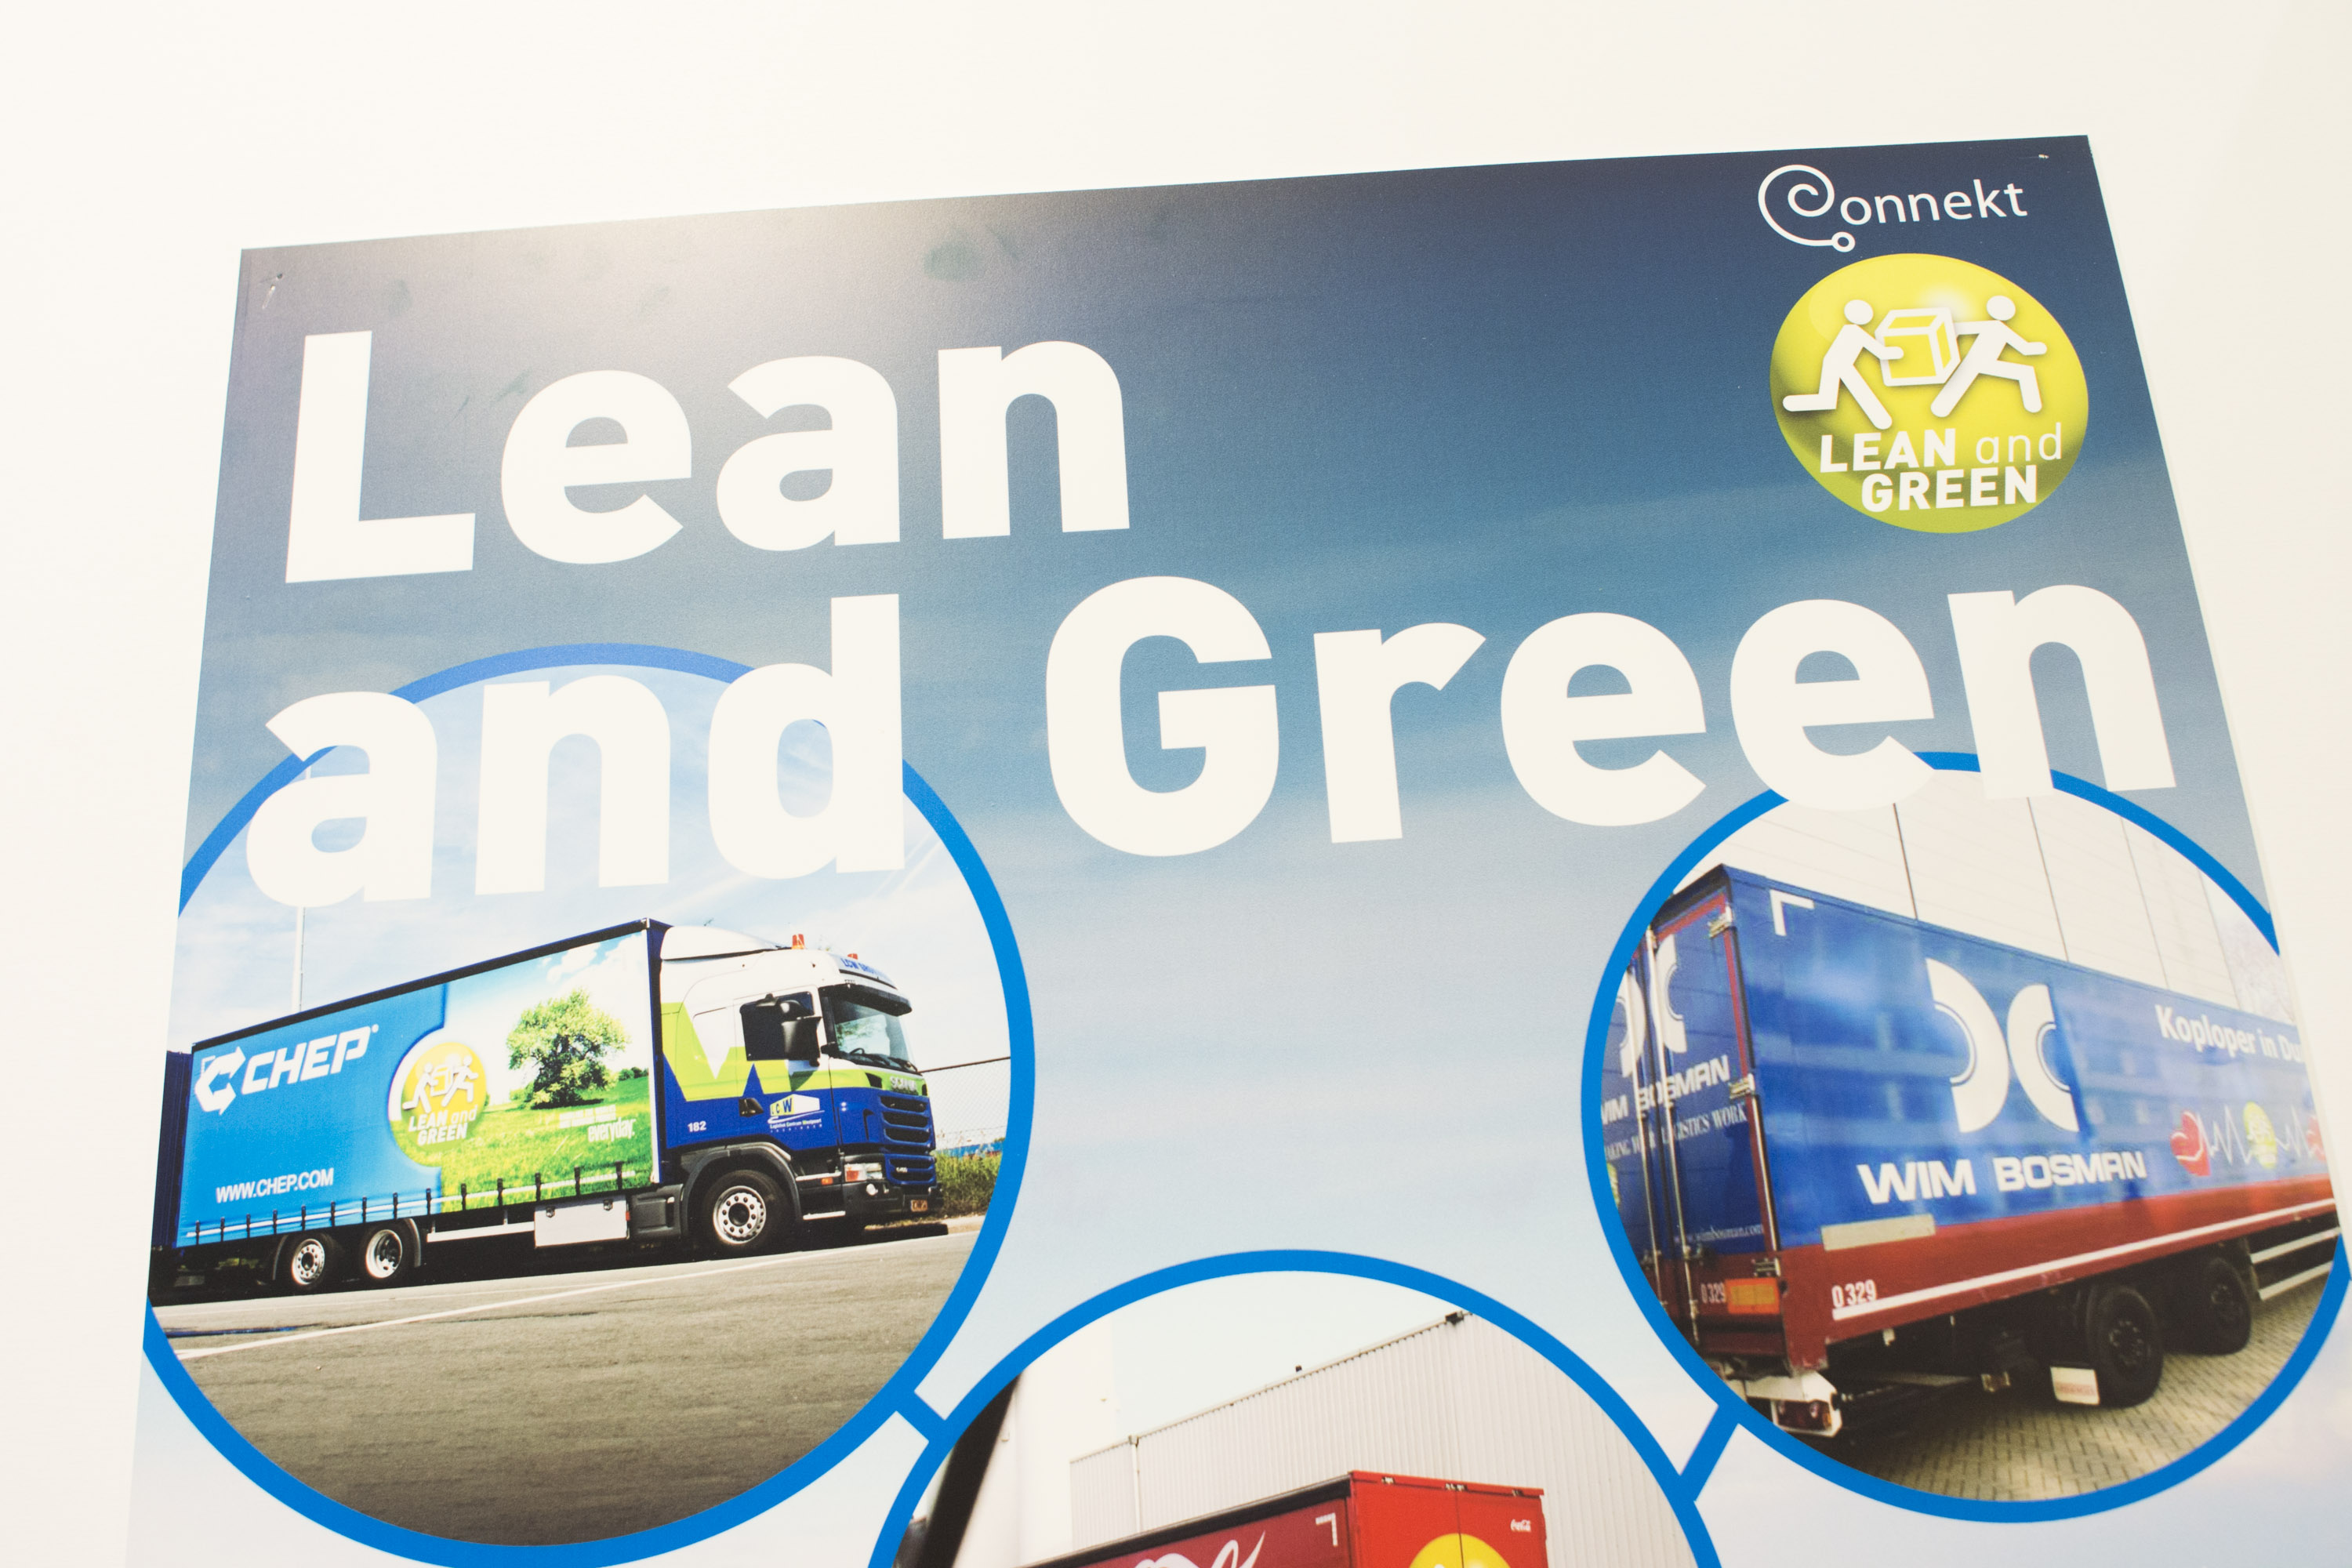 Leaner and greener logistics poster